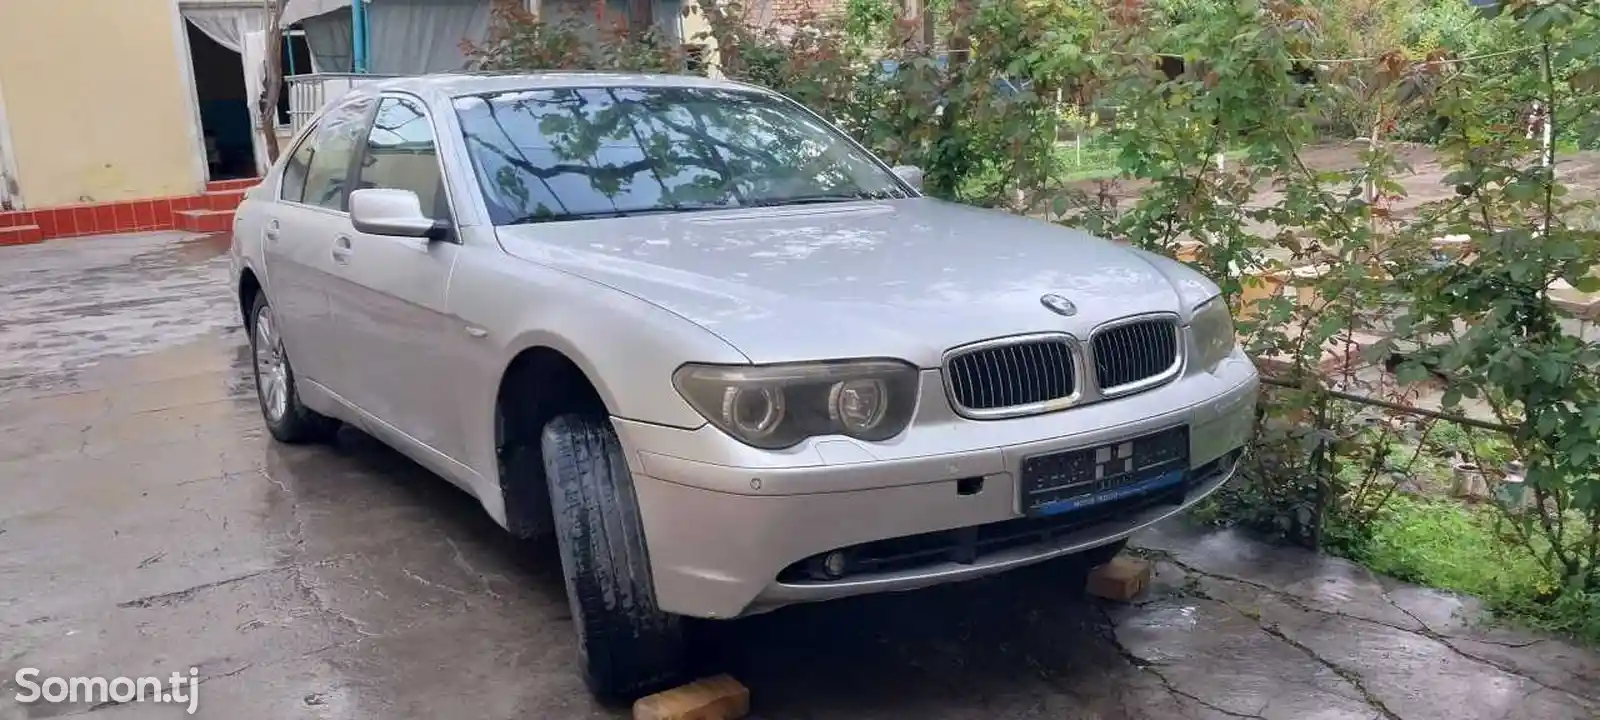 BMW 7 series, 2002-2